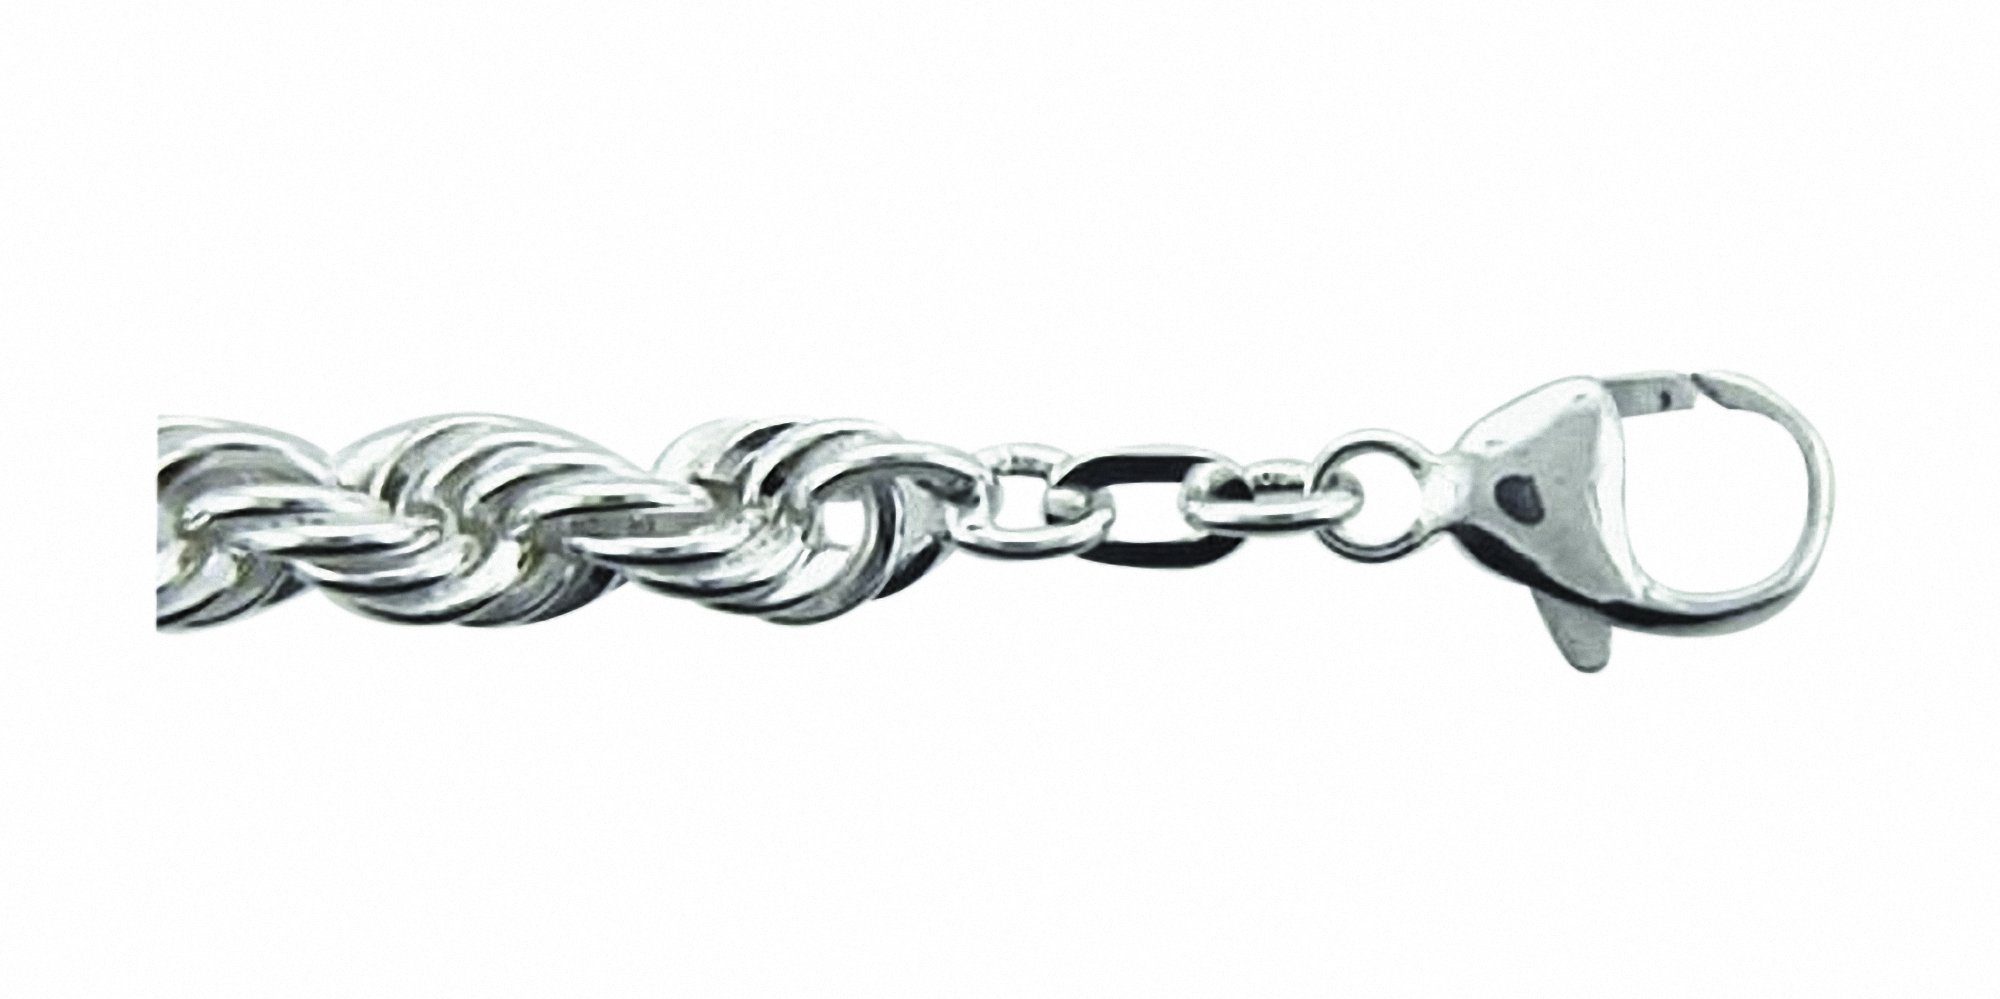 Damen Schmuck Adelia´s Silberarmband 925 Silber Kordel Armband 21 cm, 925 Sterling Silber Kordelkette Silberschmuck für Damen